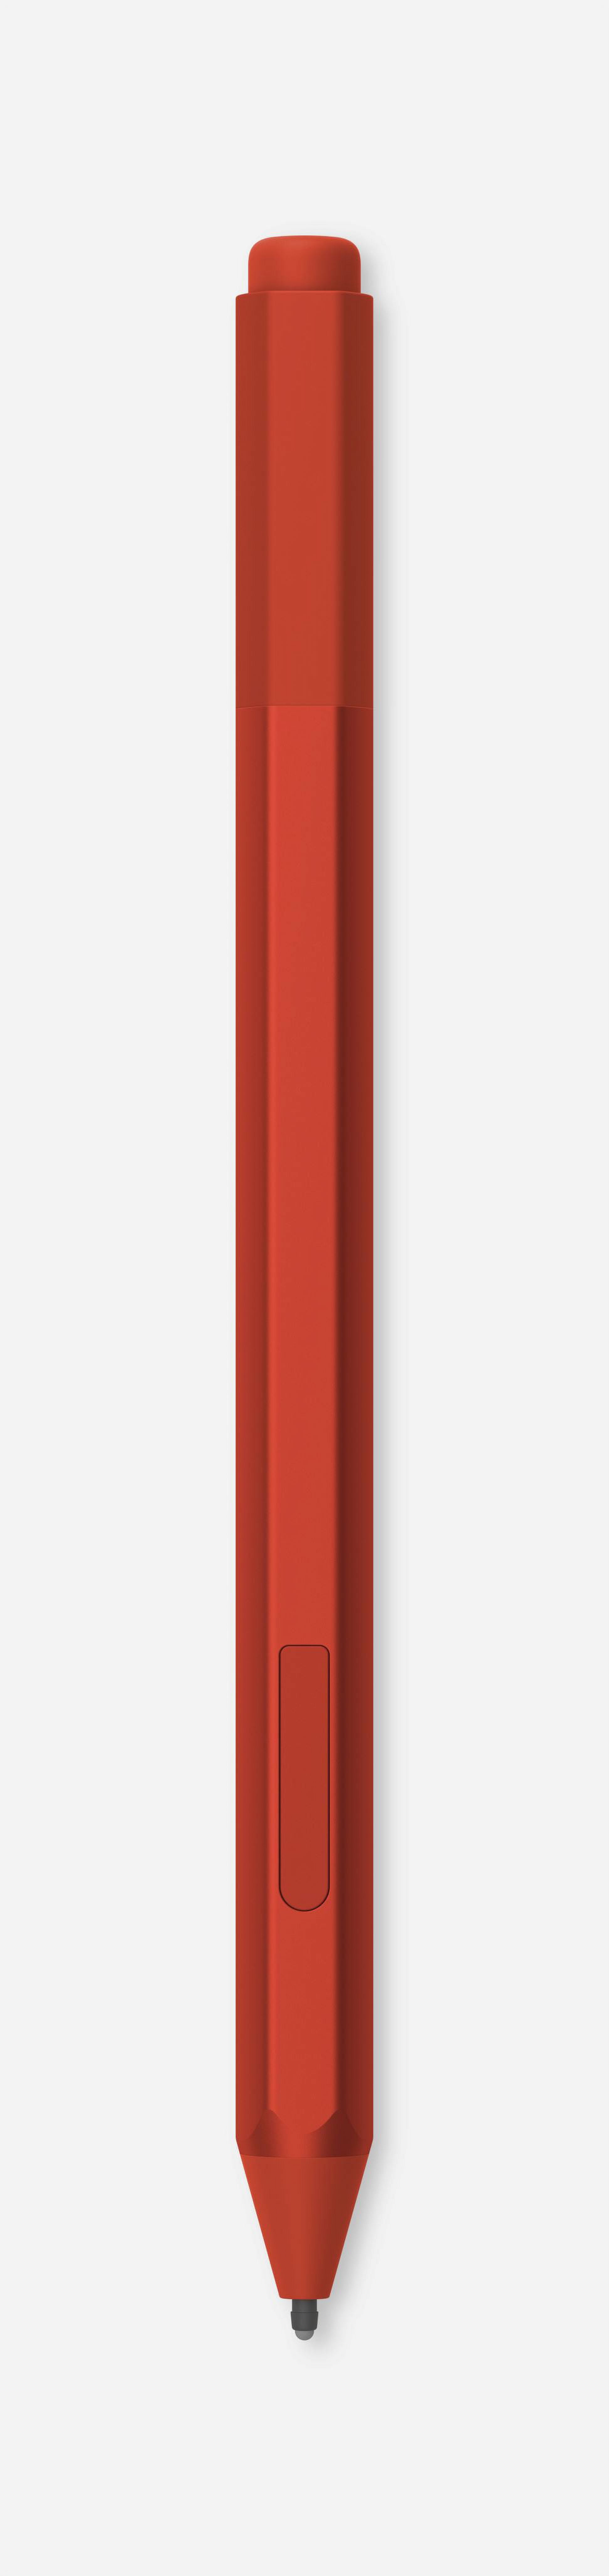 Microsoft Surface Pen, Poppy Red, EYU-00041 | Touchpens